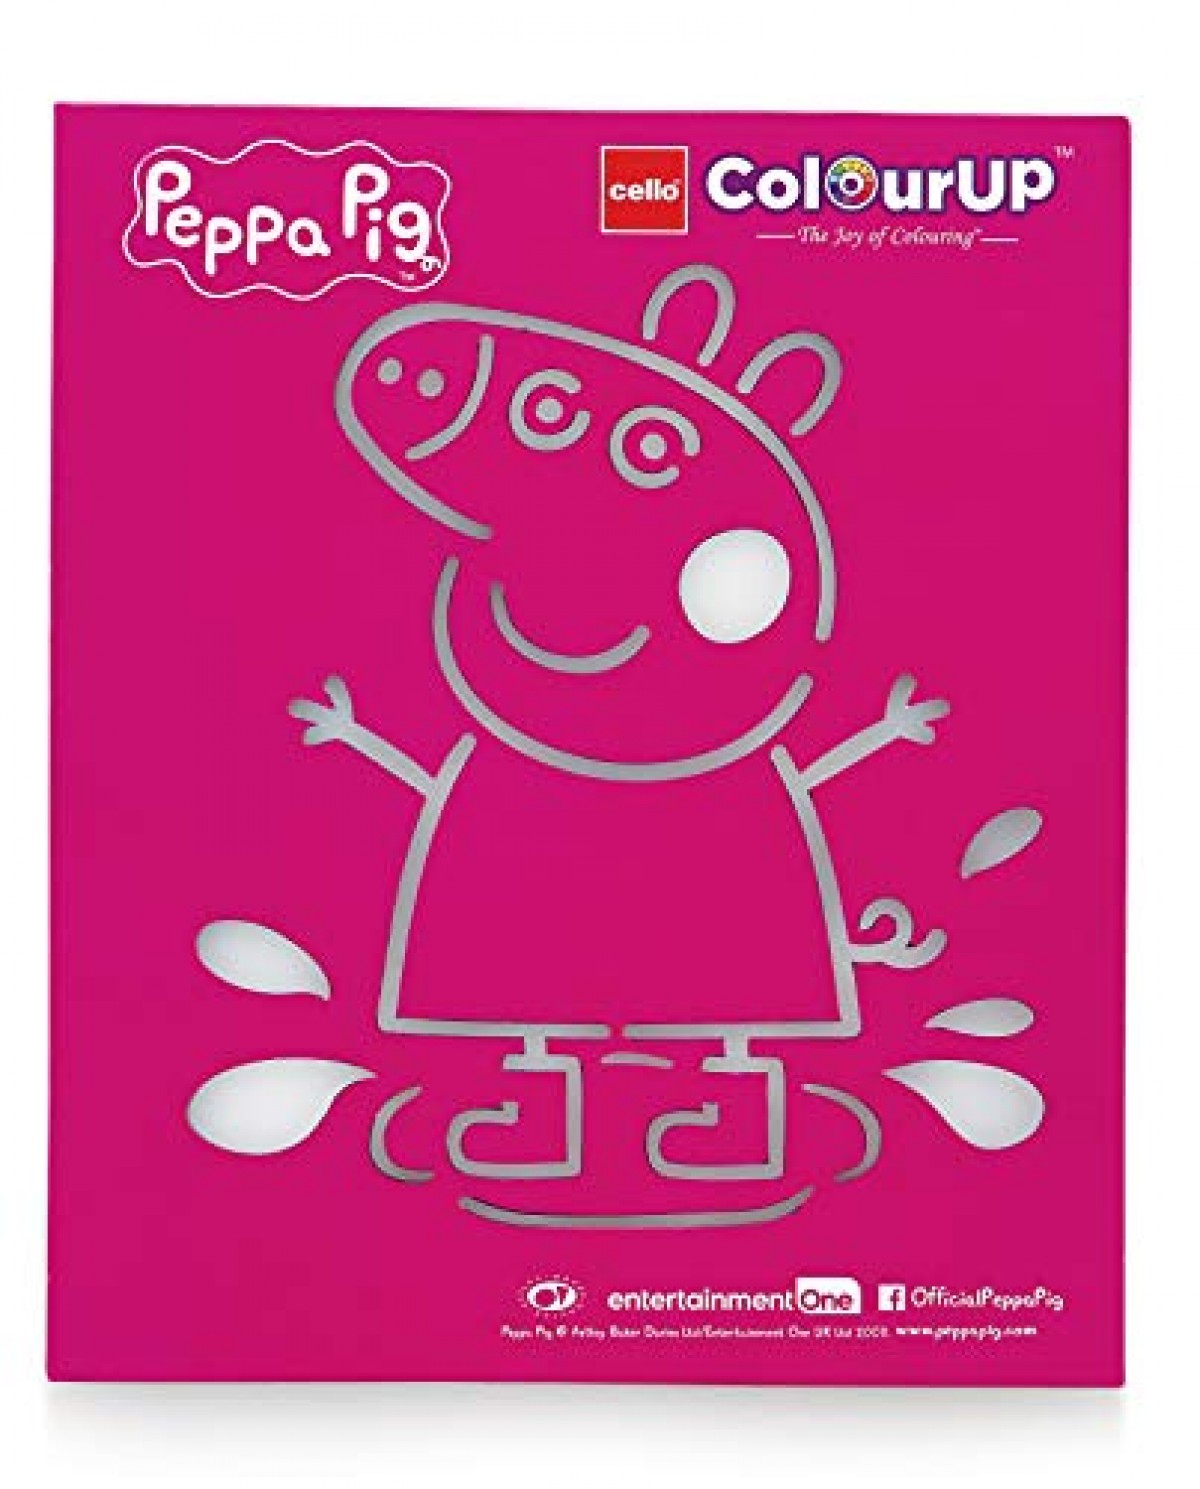 COLOURUP Colourup Peppa Pig Colouring Kit Multicolour 4Y+